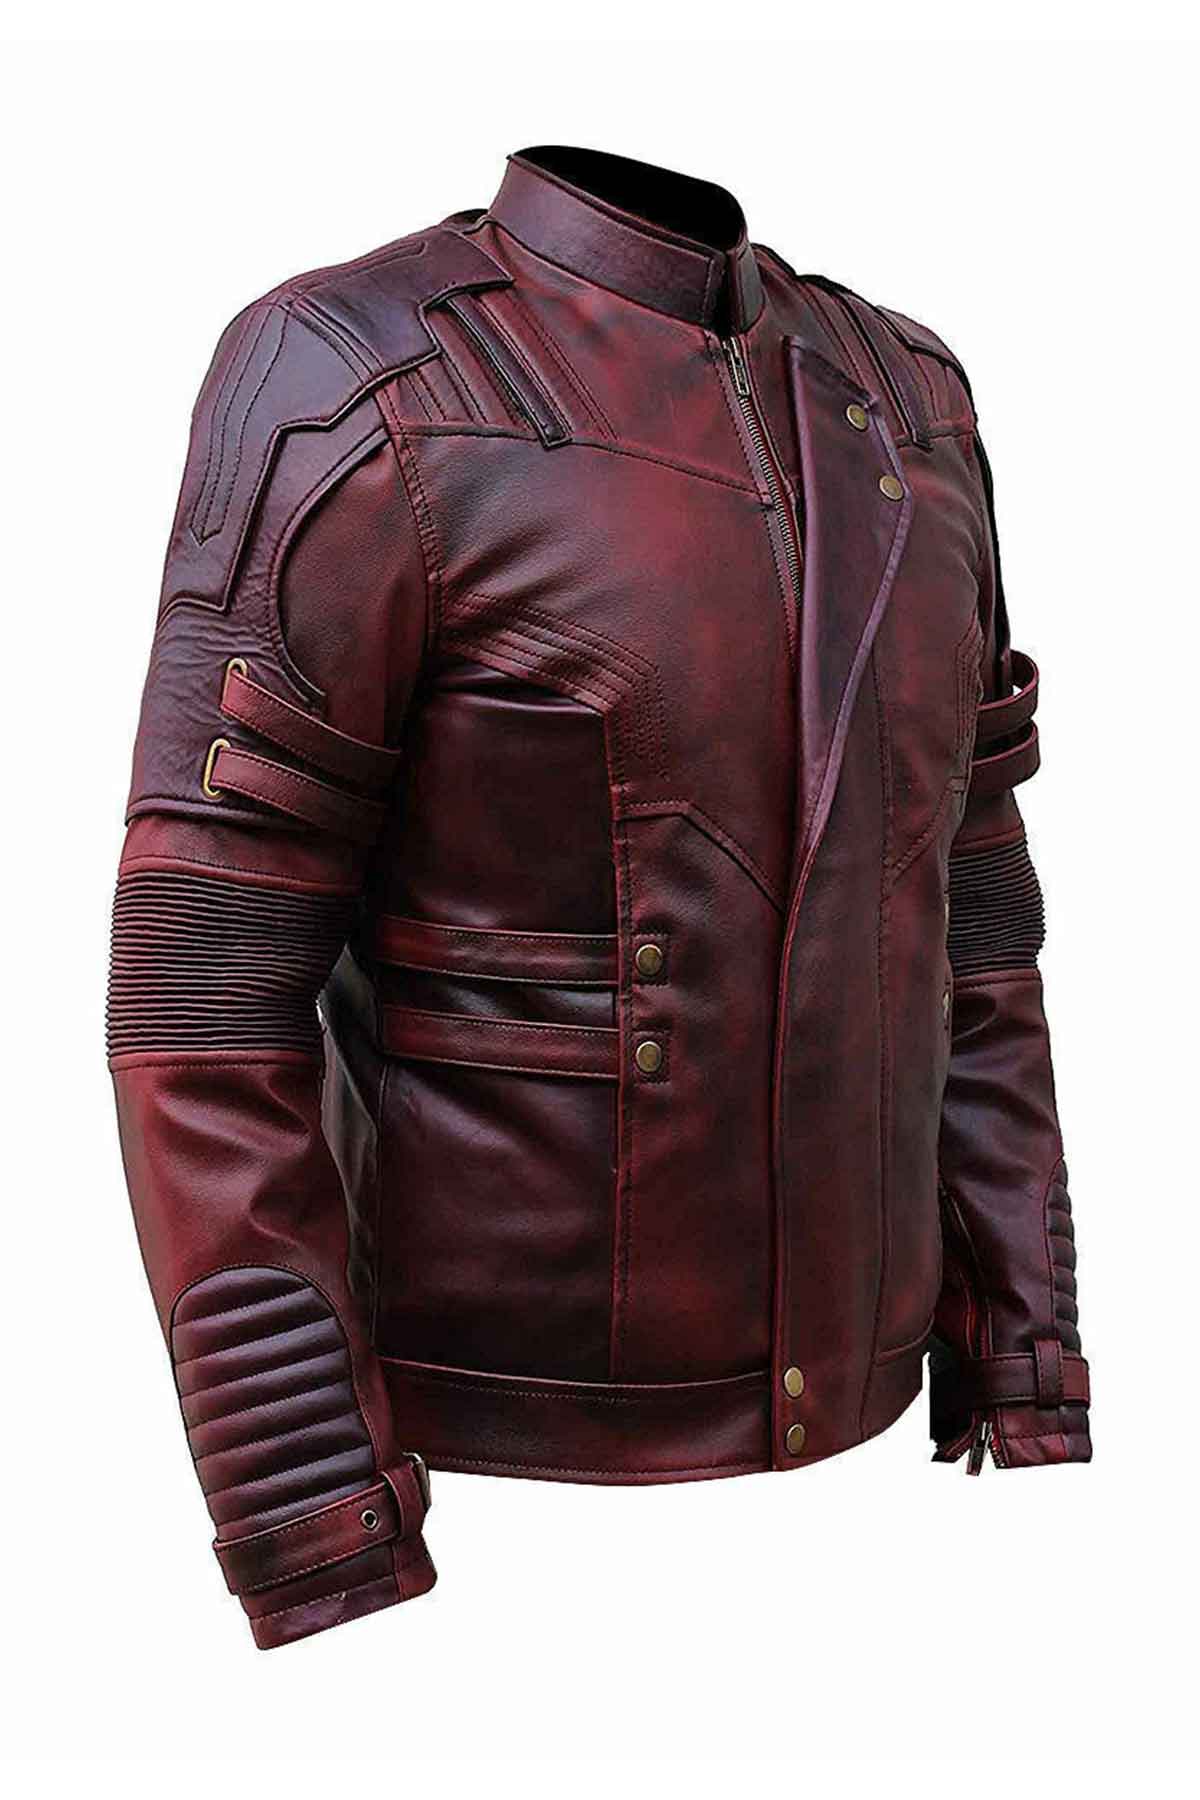 Star Wars Chris Pratt Jacket of Guardians of the Galaxy Vol. 2